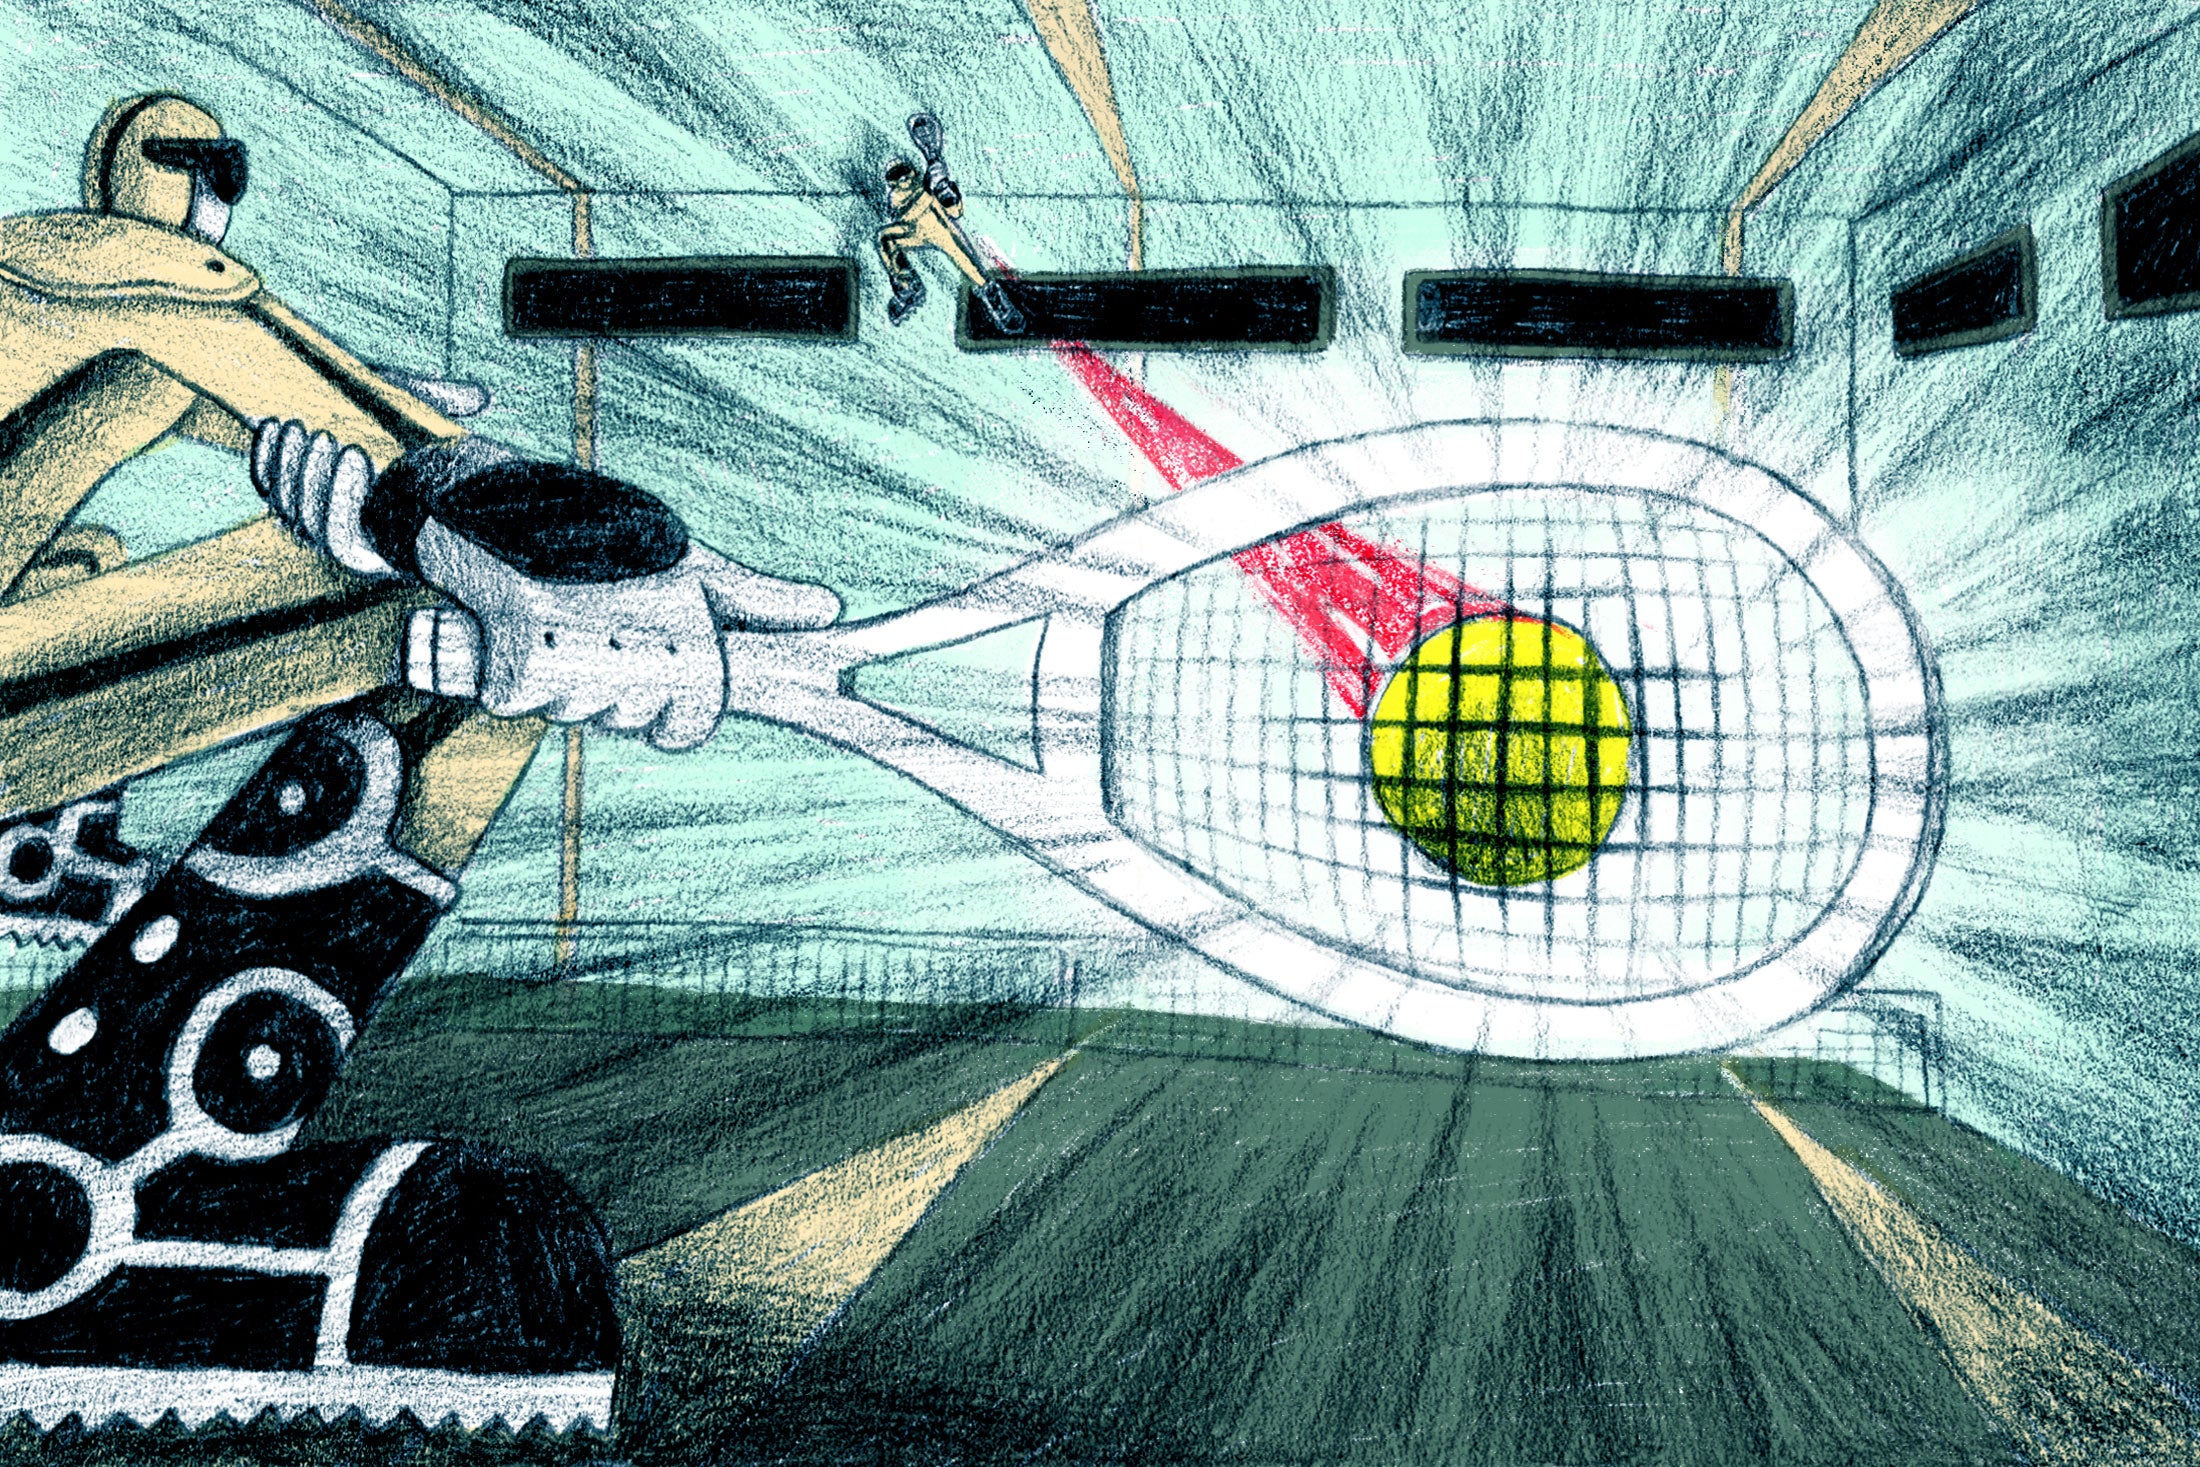 Illustration of a FogoTennis match involving high-velocity swings.